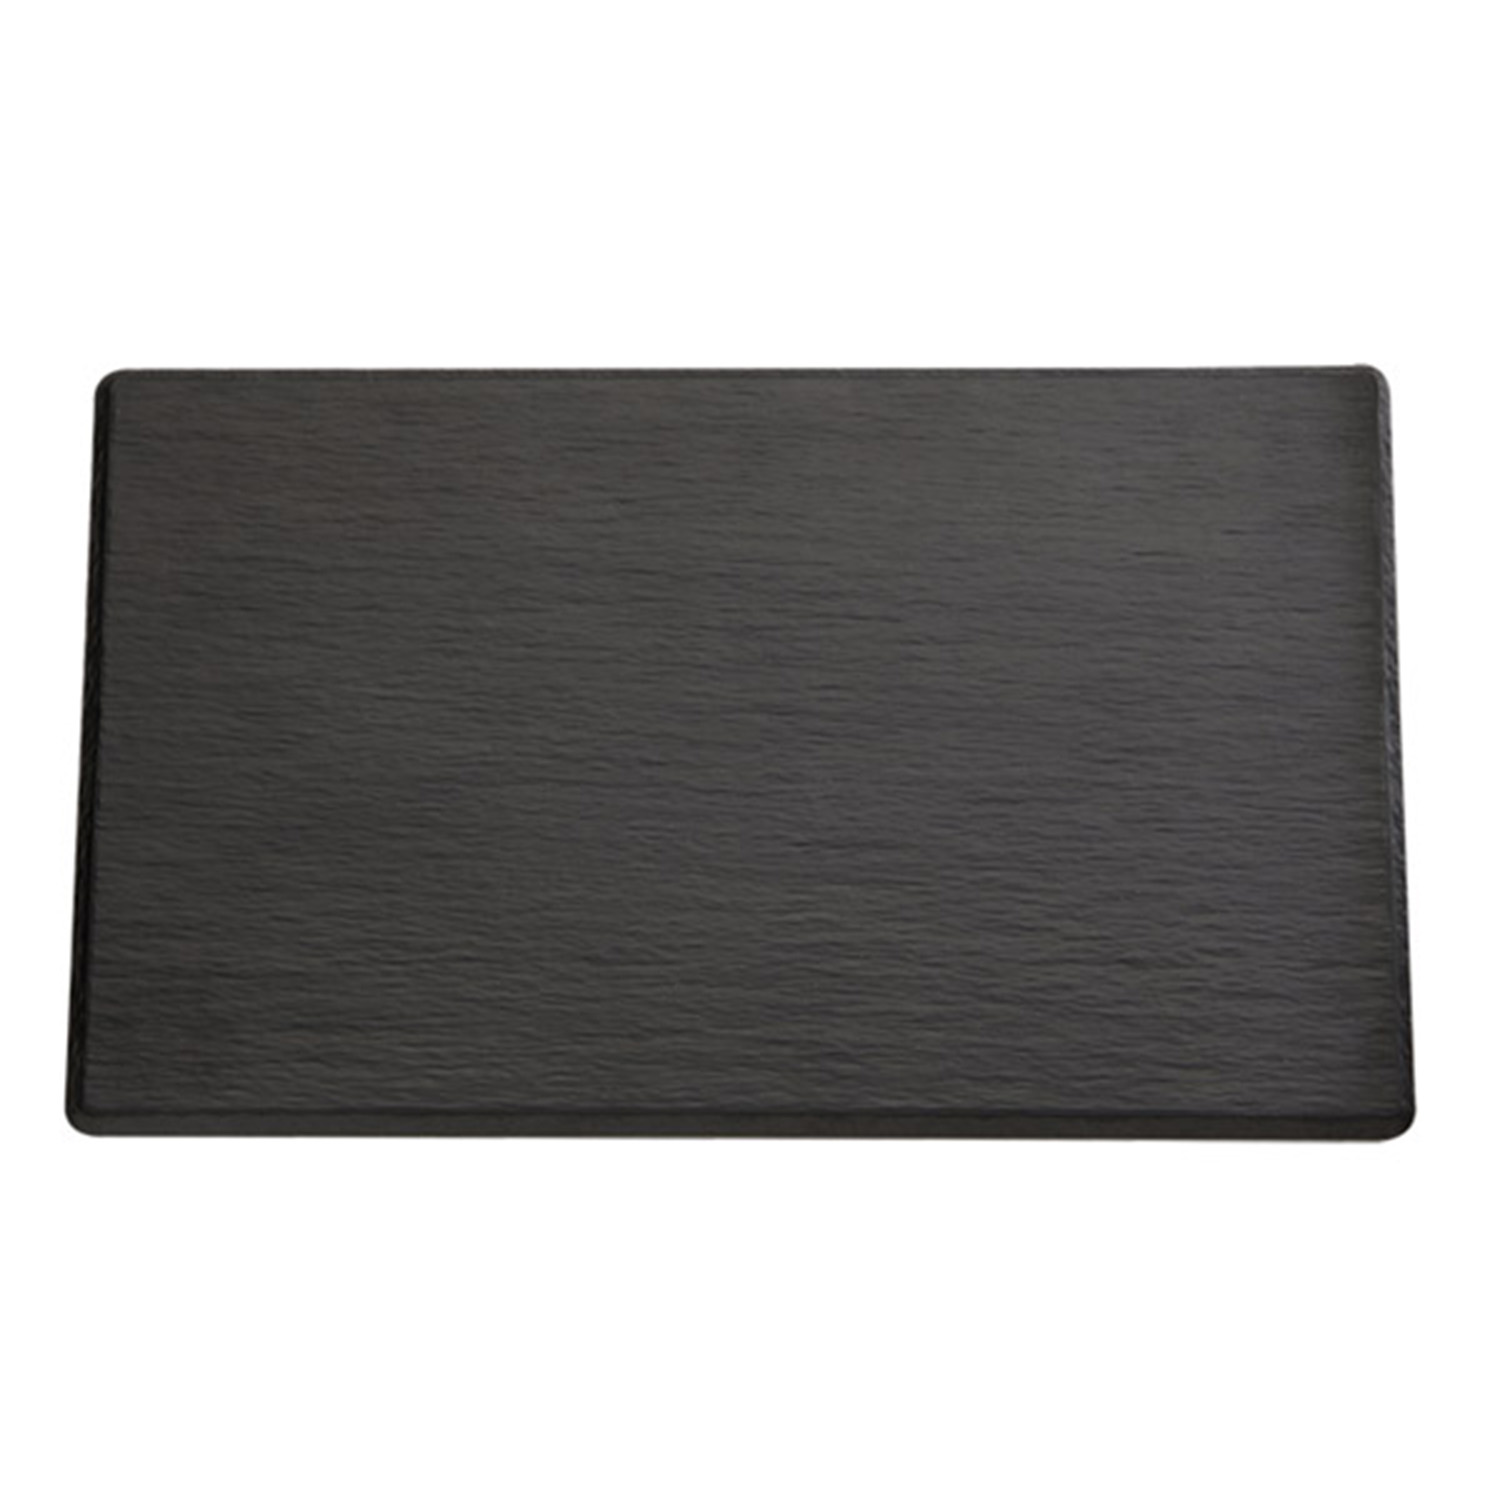 GN 2/4 Tablett -SLATE- 53 x 16,2 cm, H: 1 cm Melamin, schwarz, Schieferlook